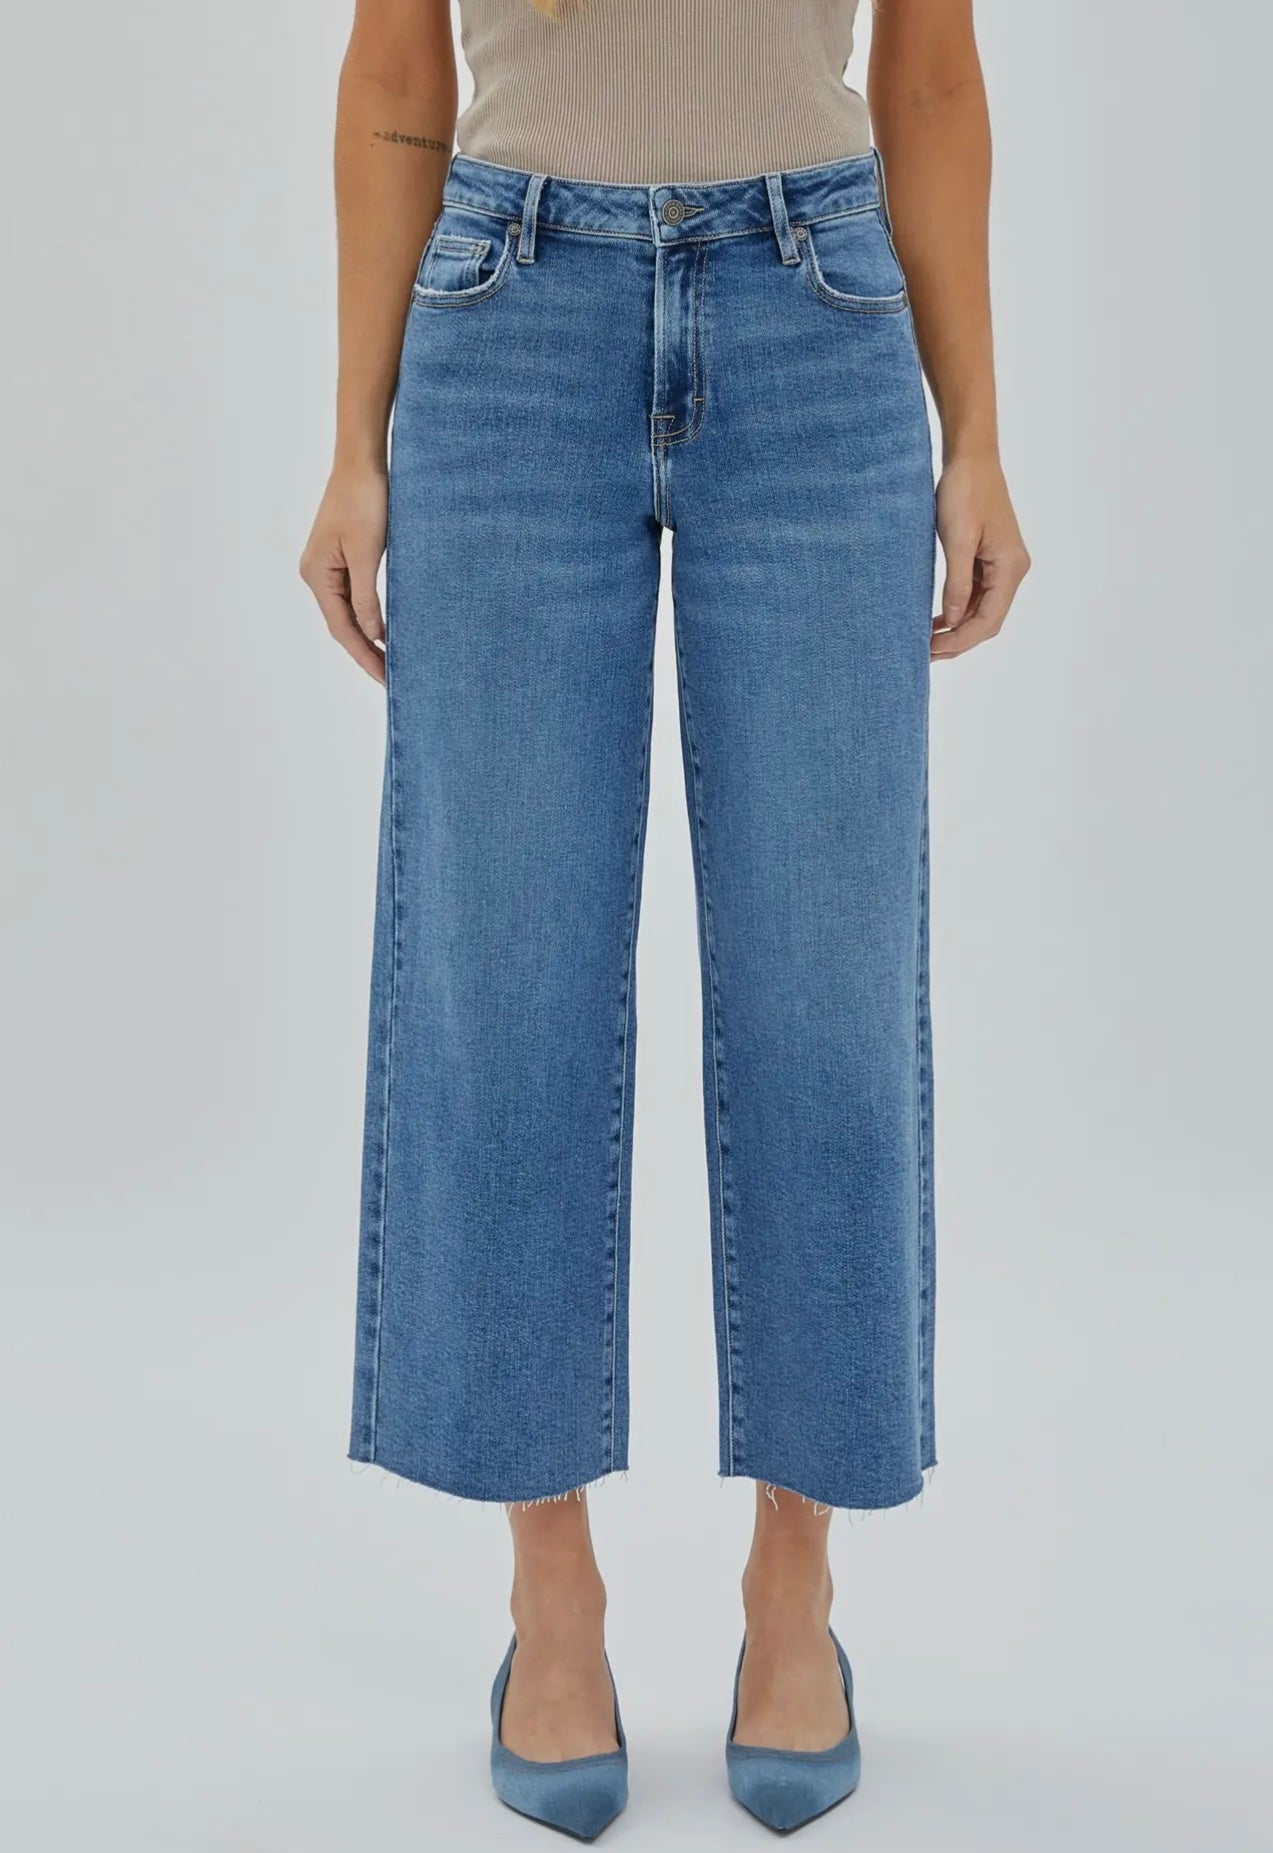 Denim & Jeans – Kate and Hale Shop